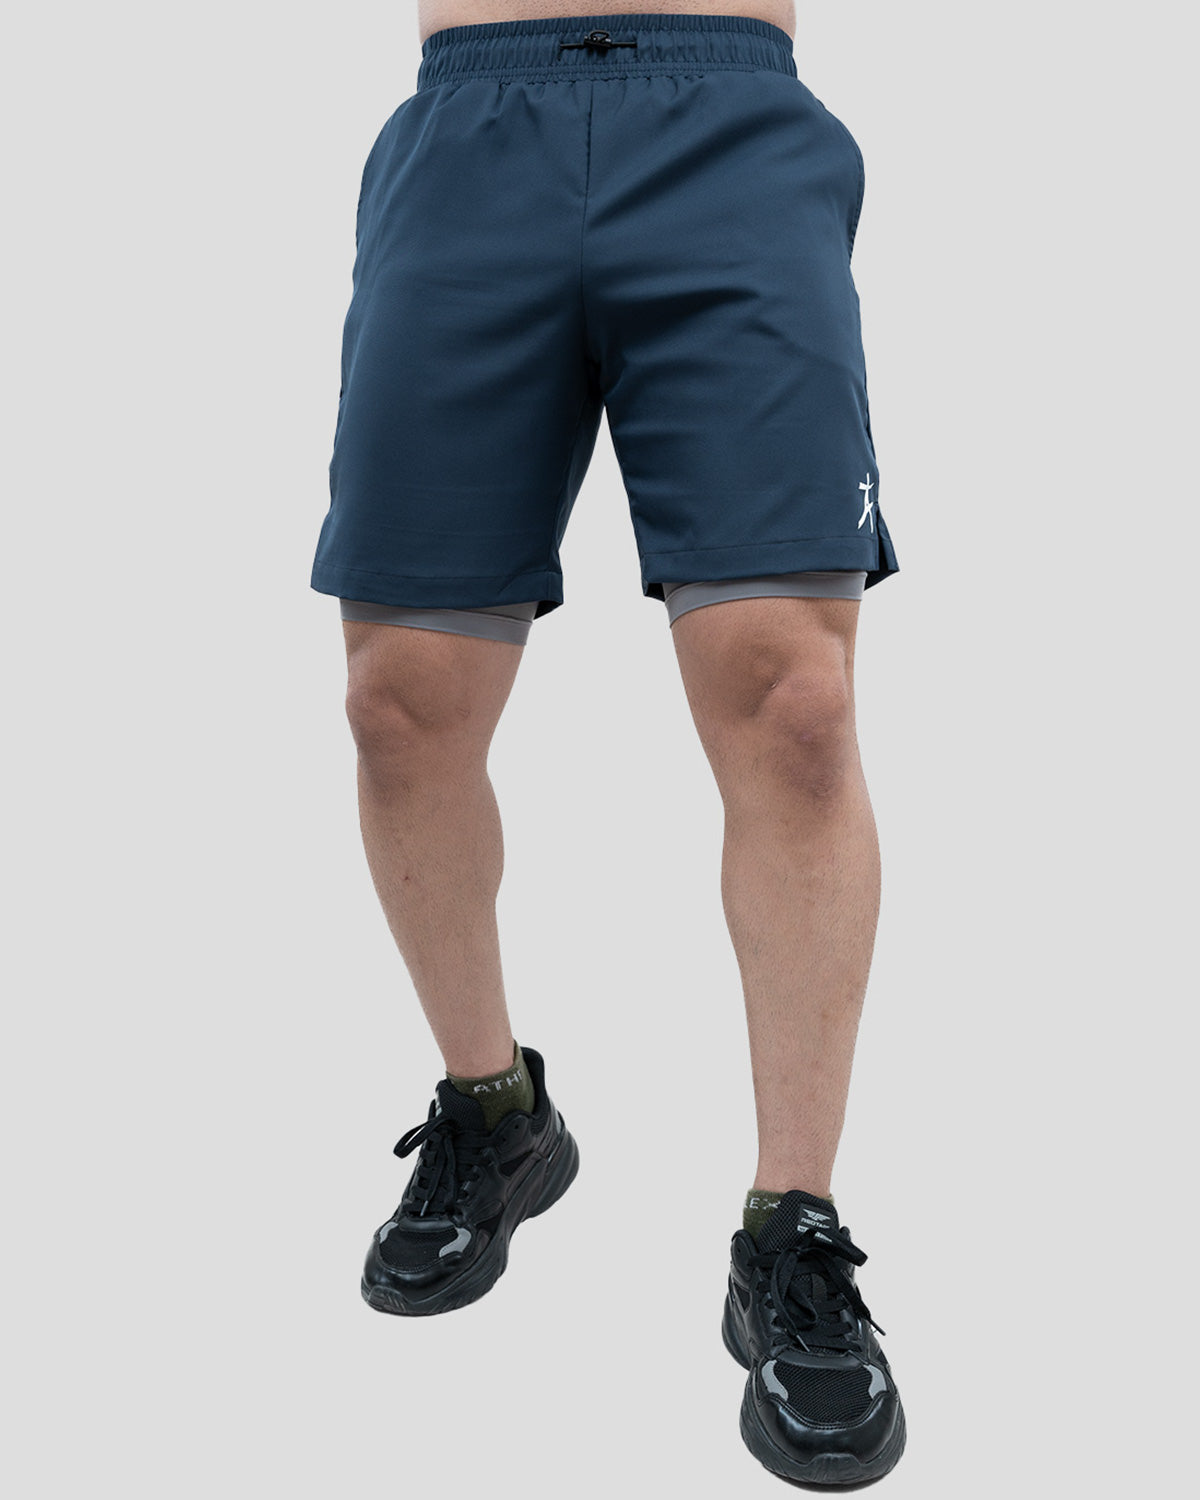 Lifting 2 in 1 Shorts (Navy Blue/Grey)